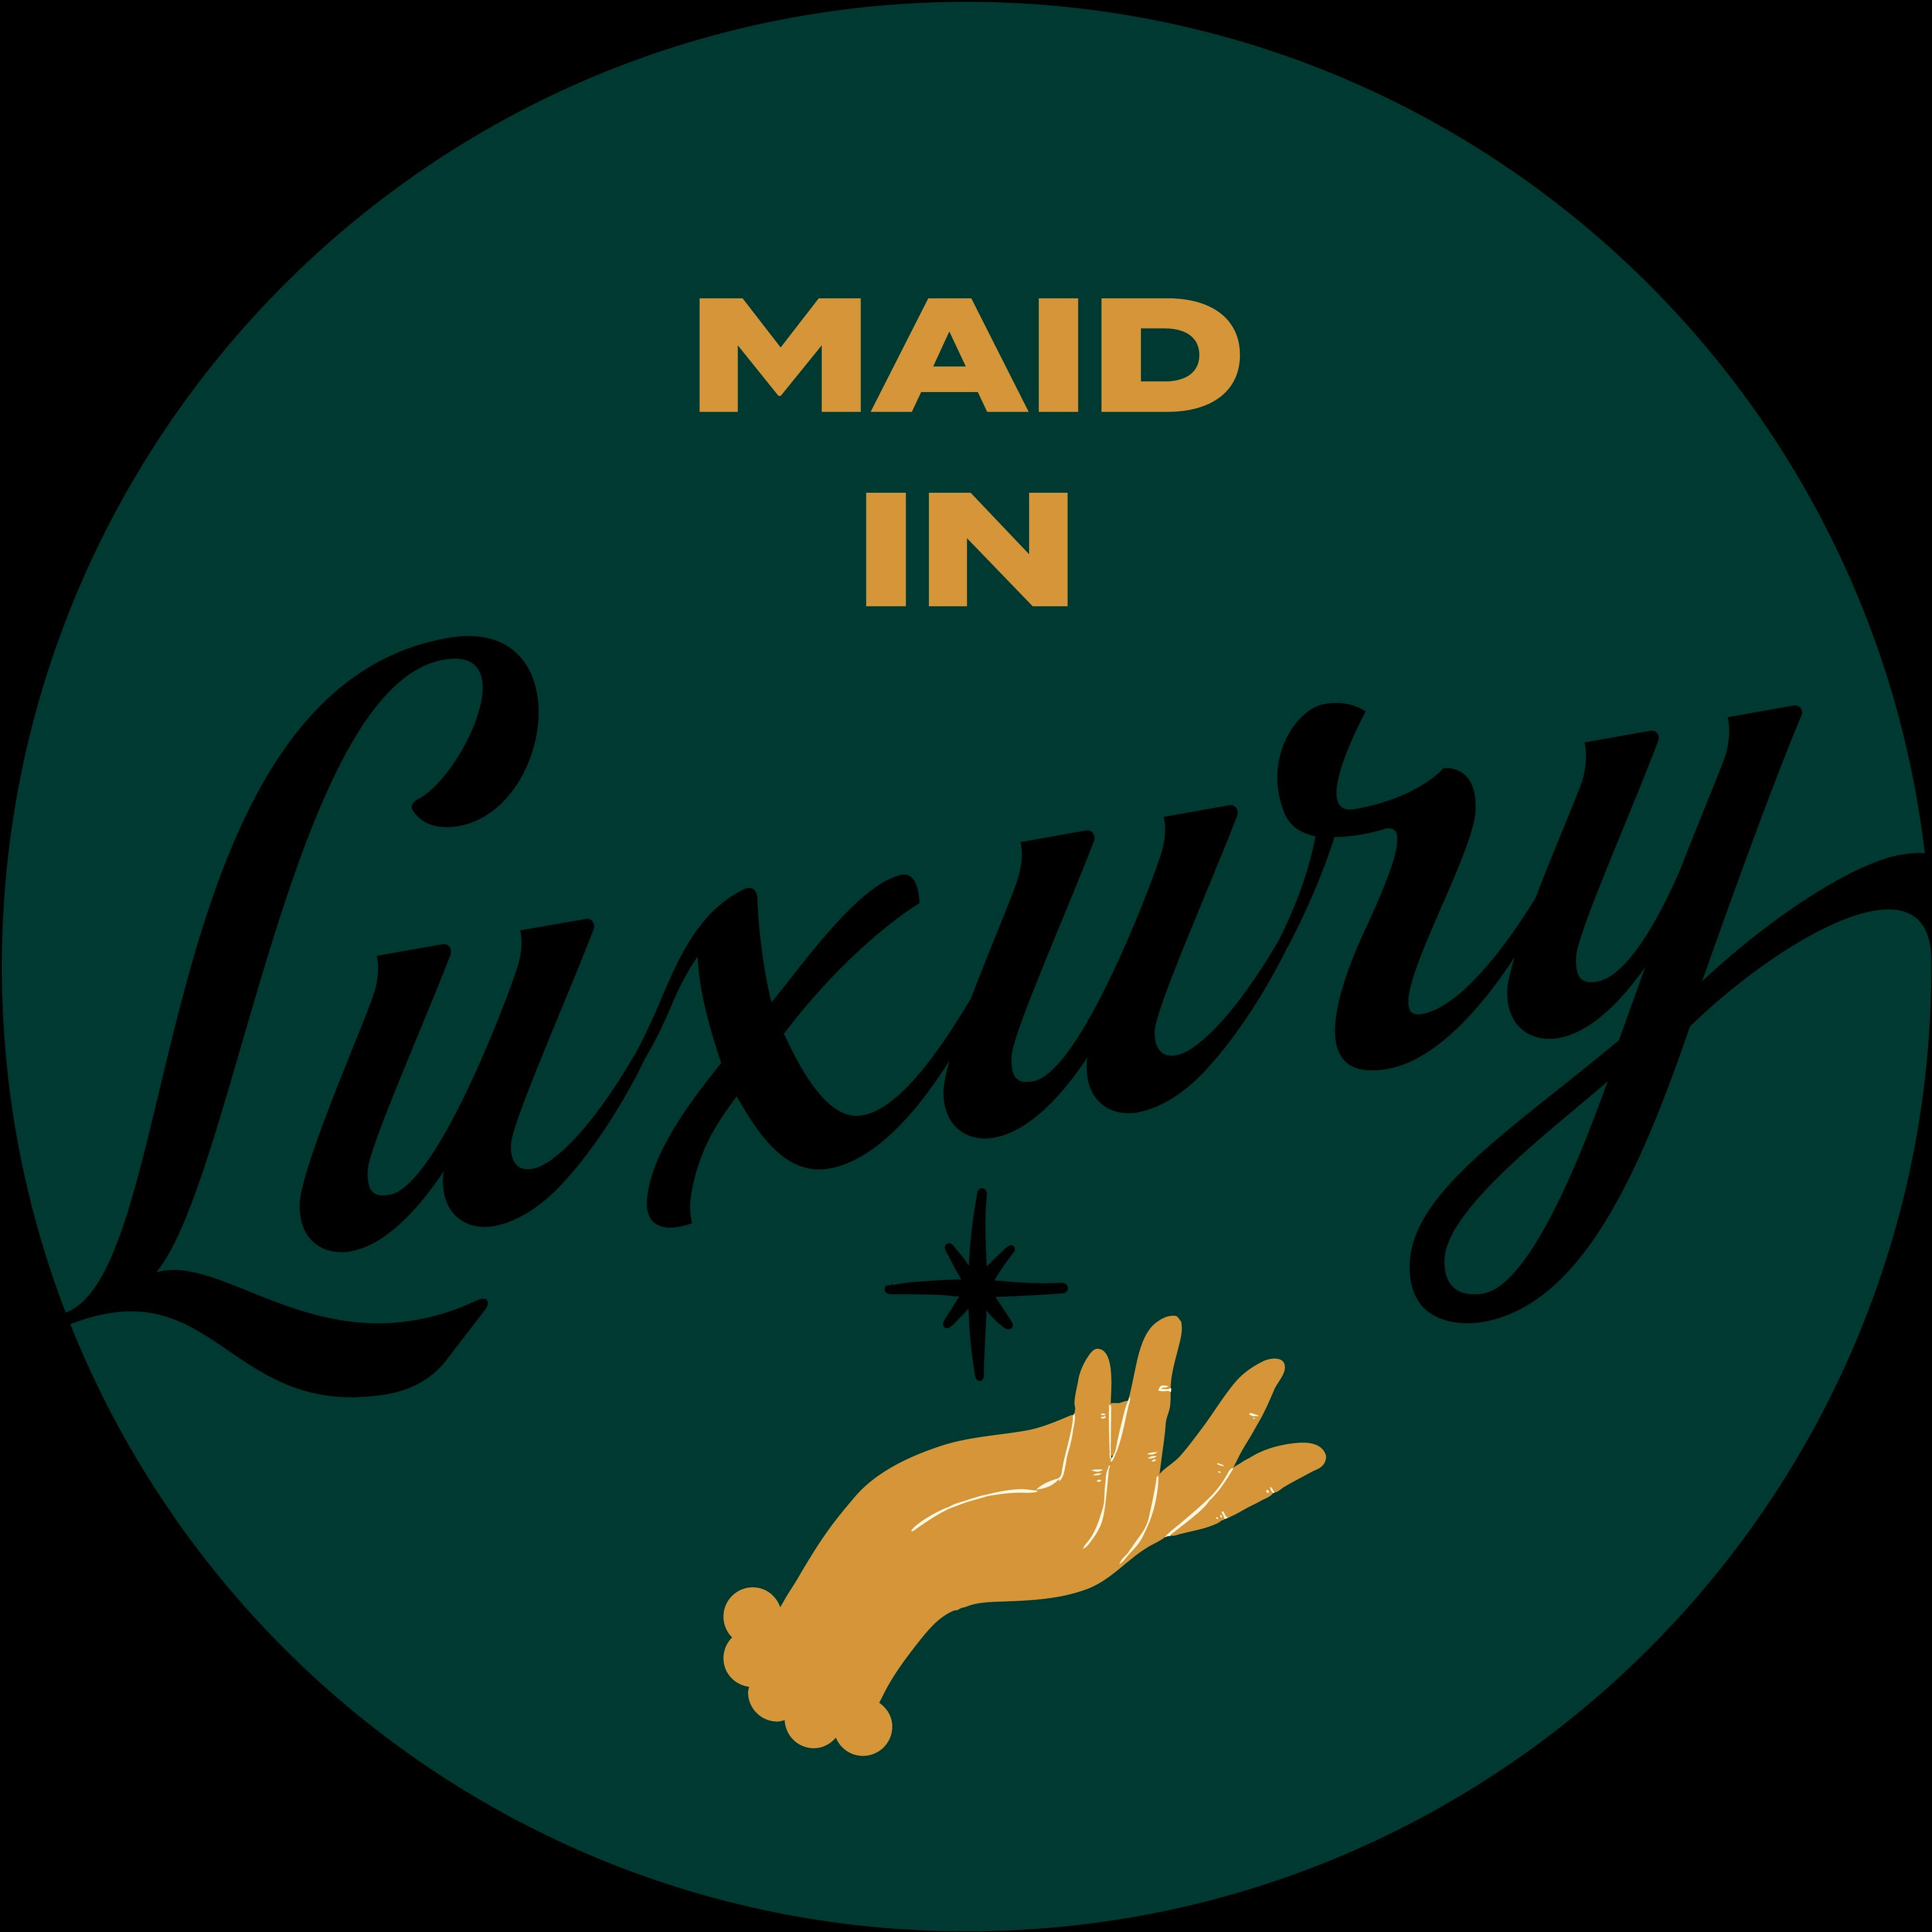 Maid In Luxury's logo